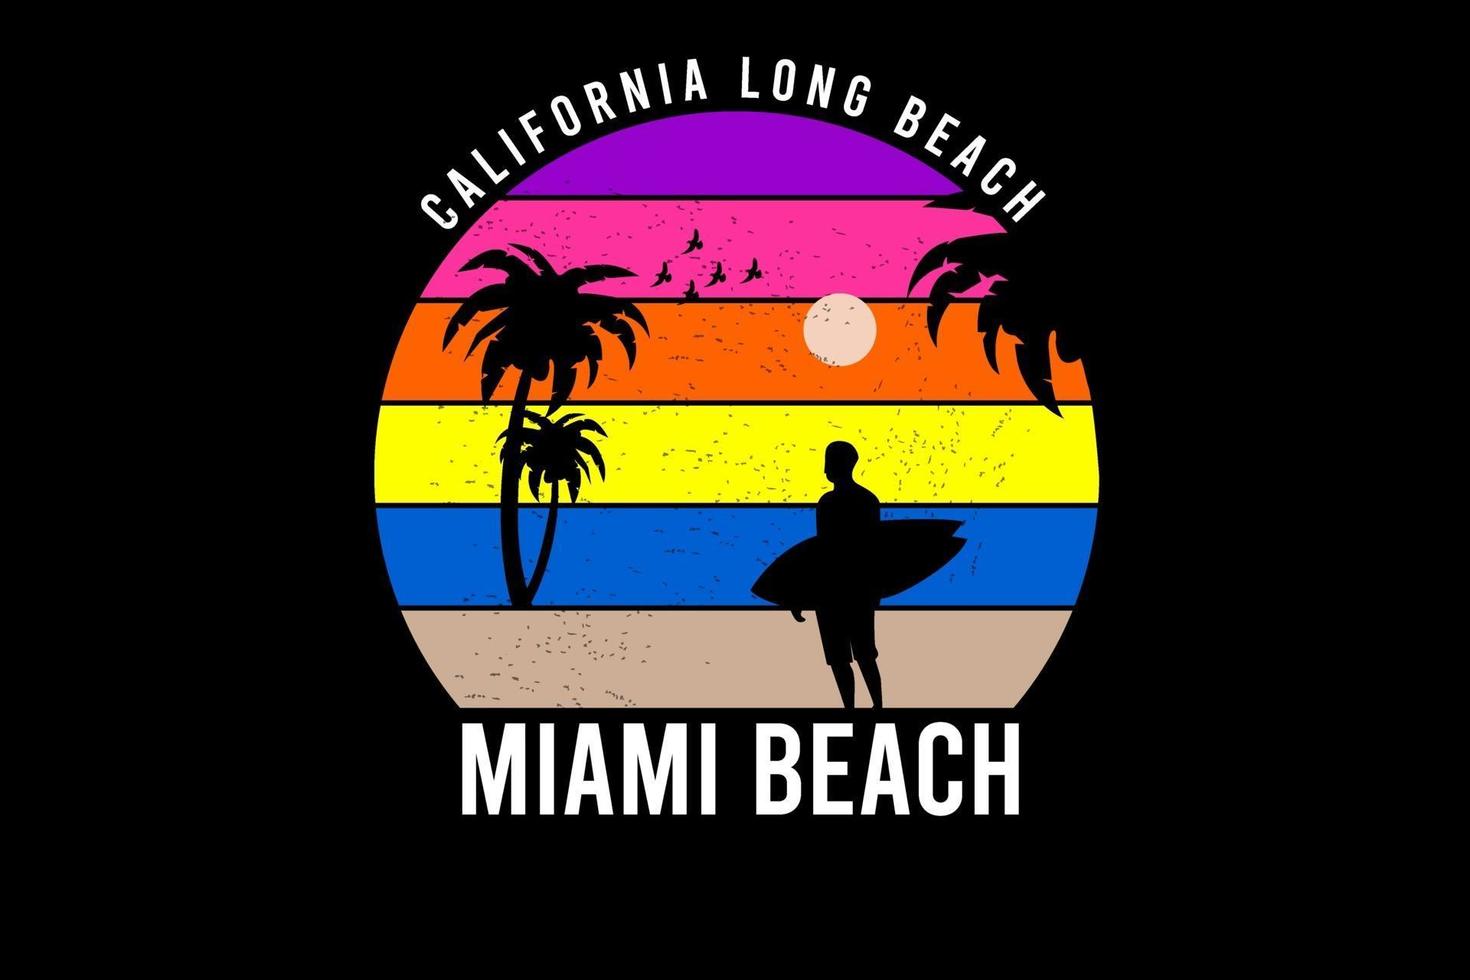 t-shirt california long beach miami beach color yellow and orange purple vector